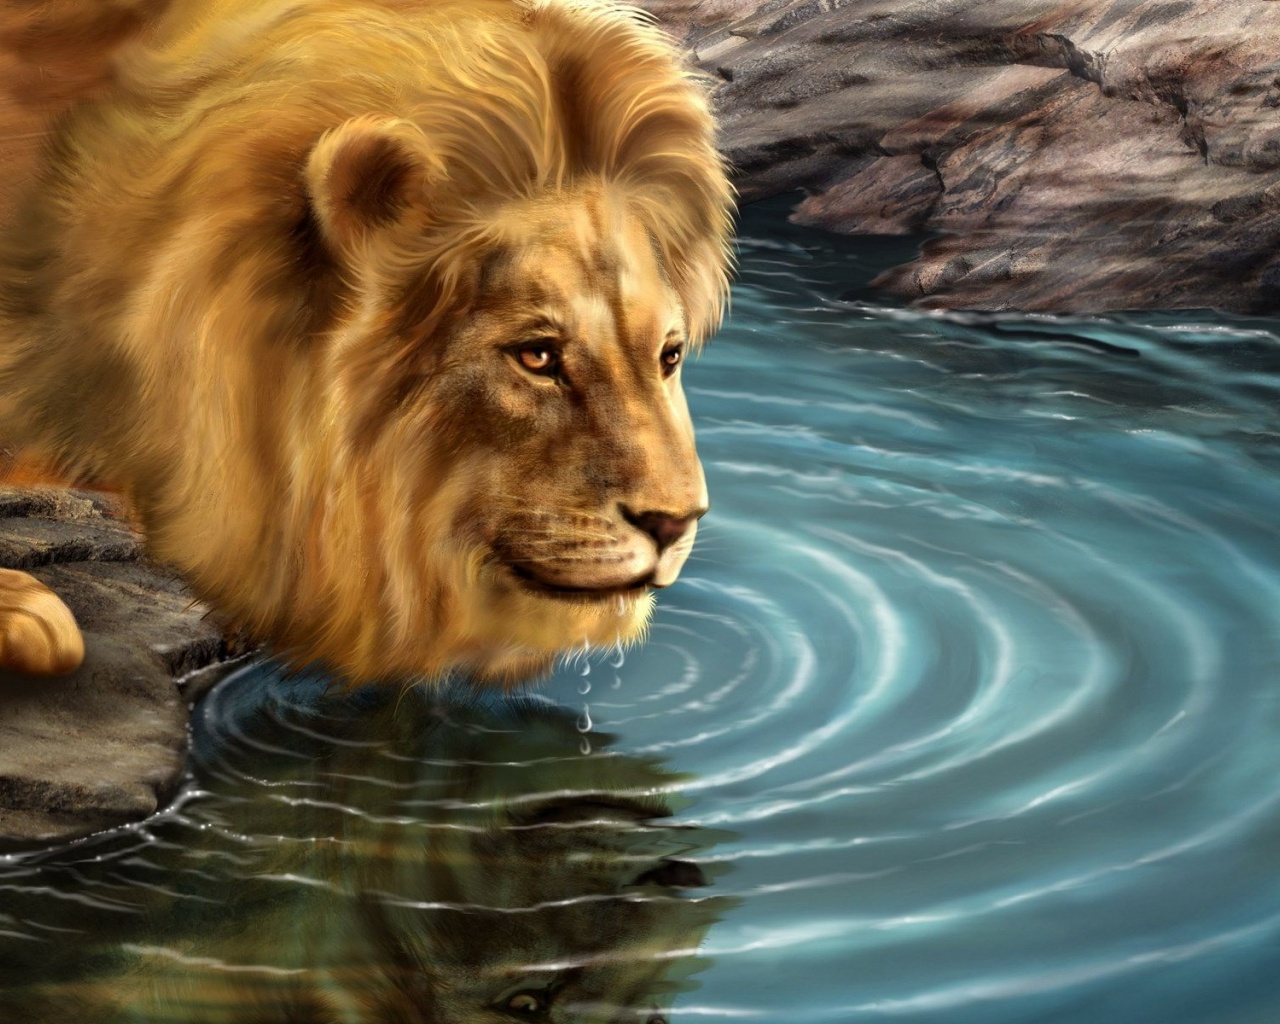 Lion Drinking Water